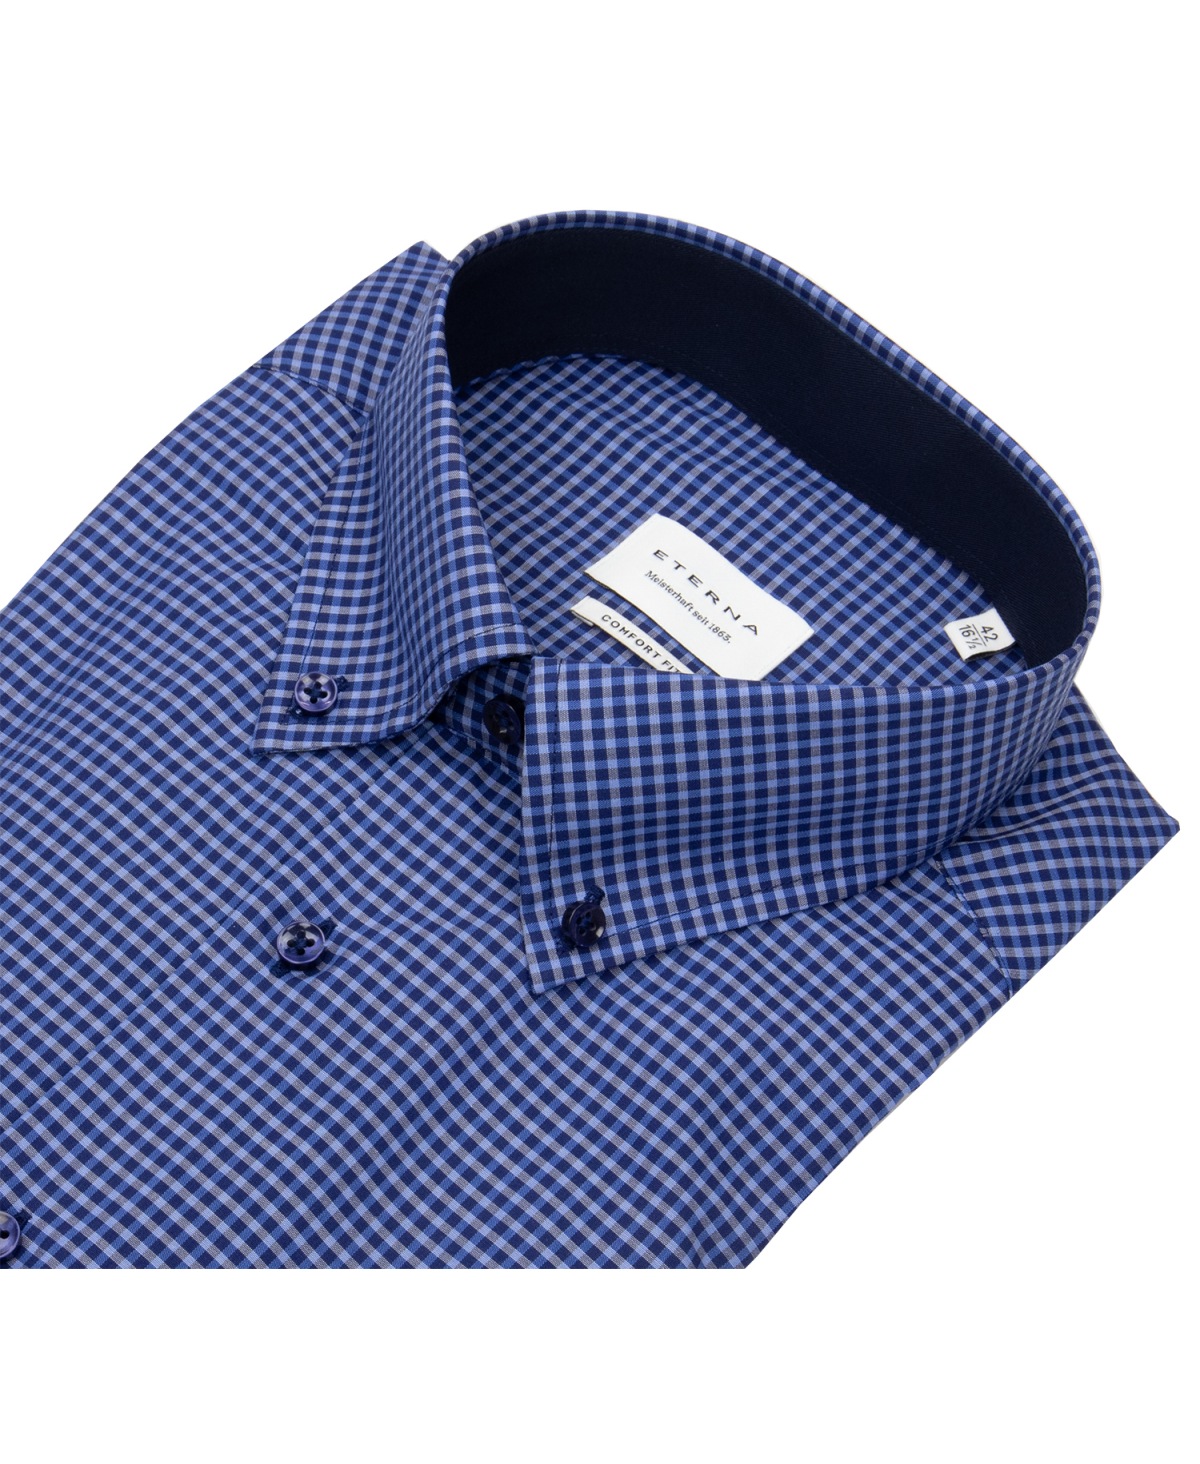 - Down - blau - Eterna / Hemd Comfort Button dunkelblau Fit